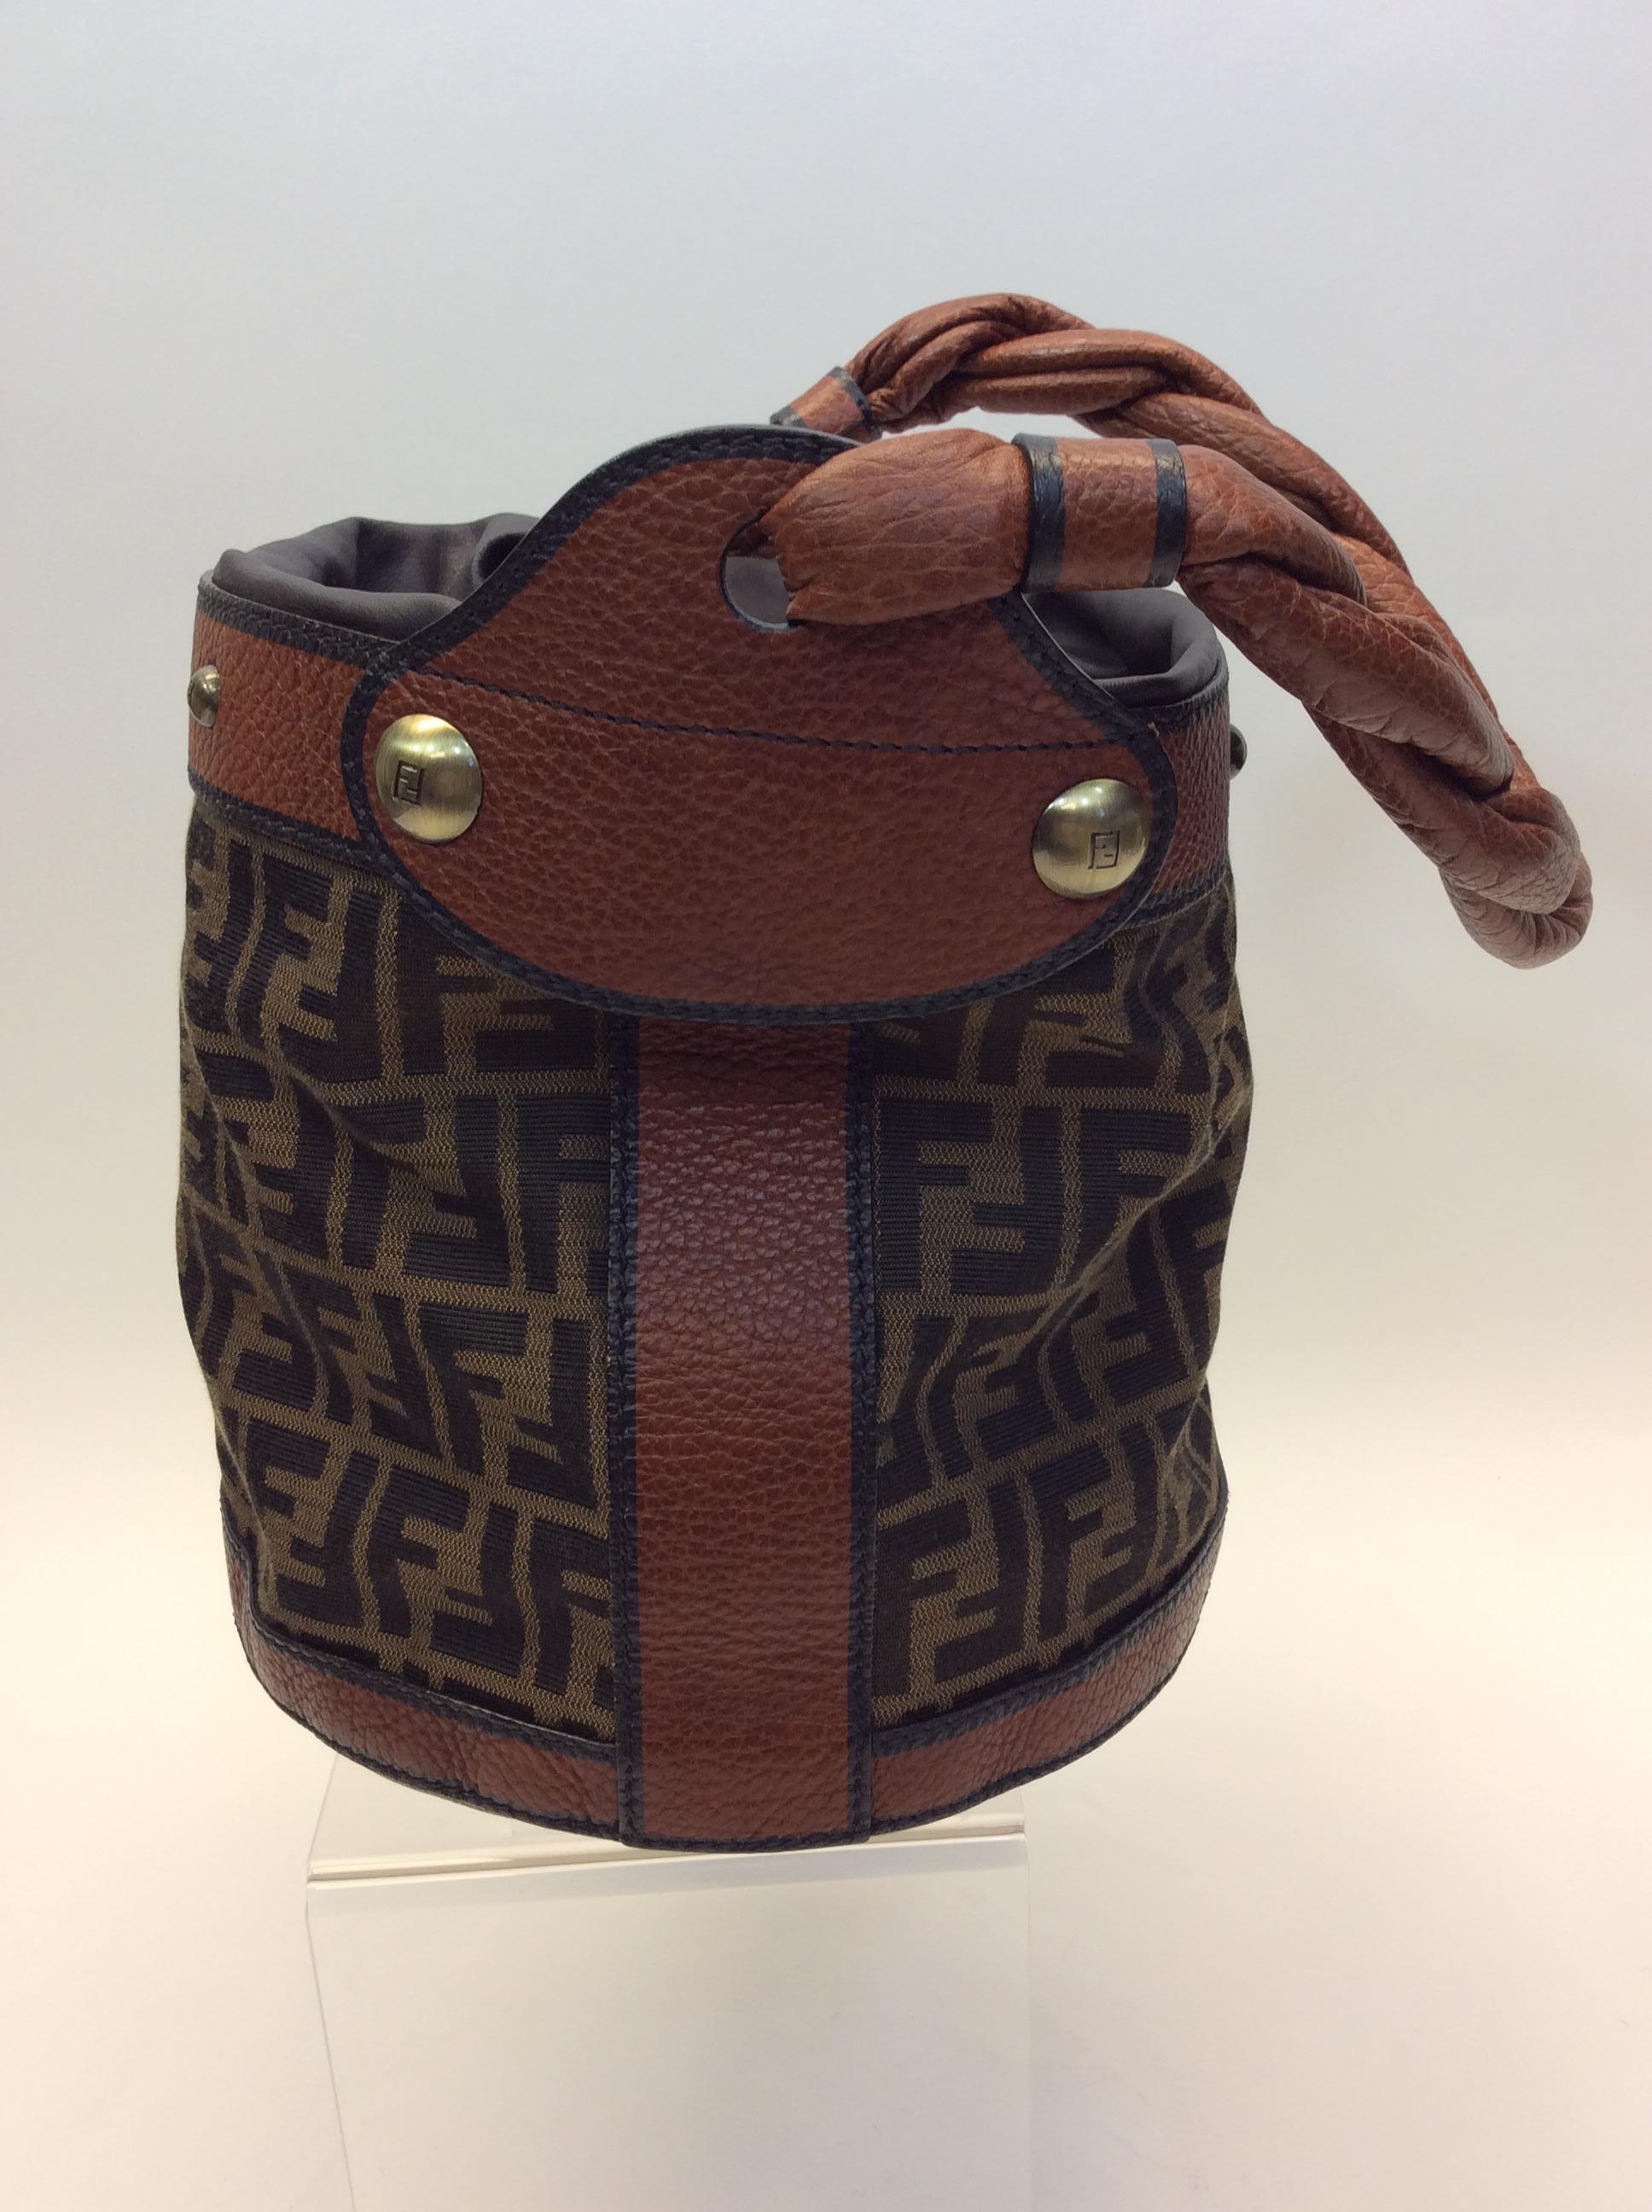 Fendi Monogram Brown Drawstring Bucket Bag
$499
Made in Italy
10